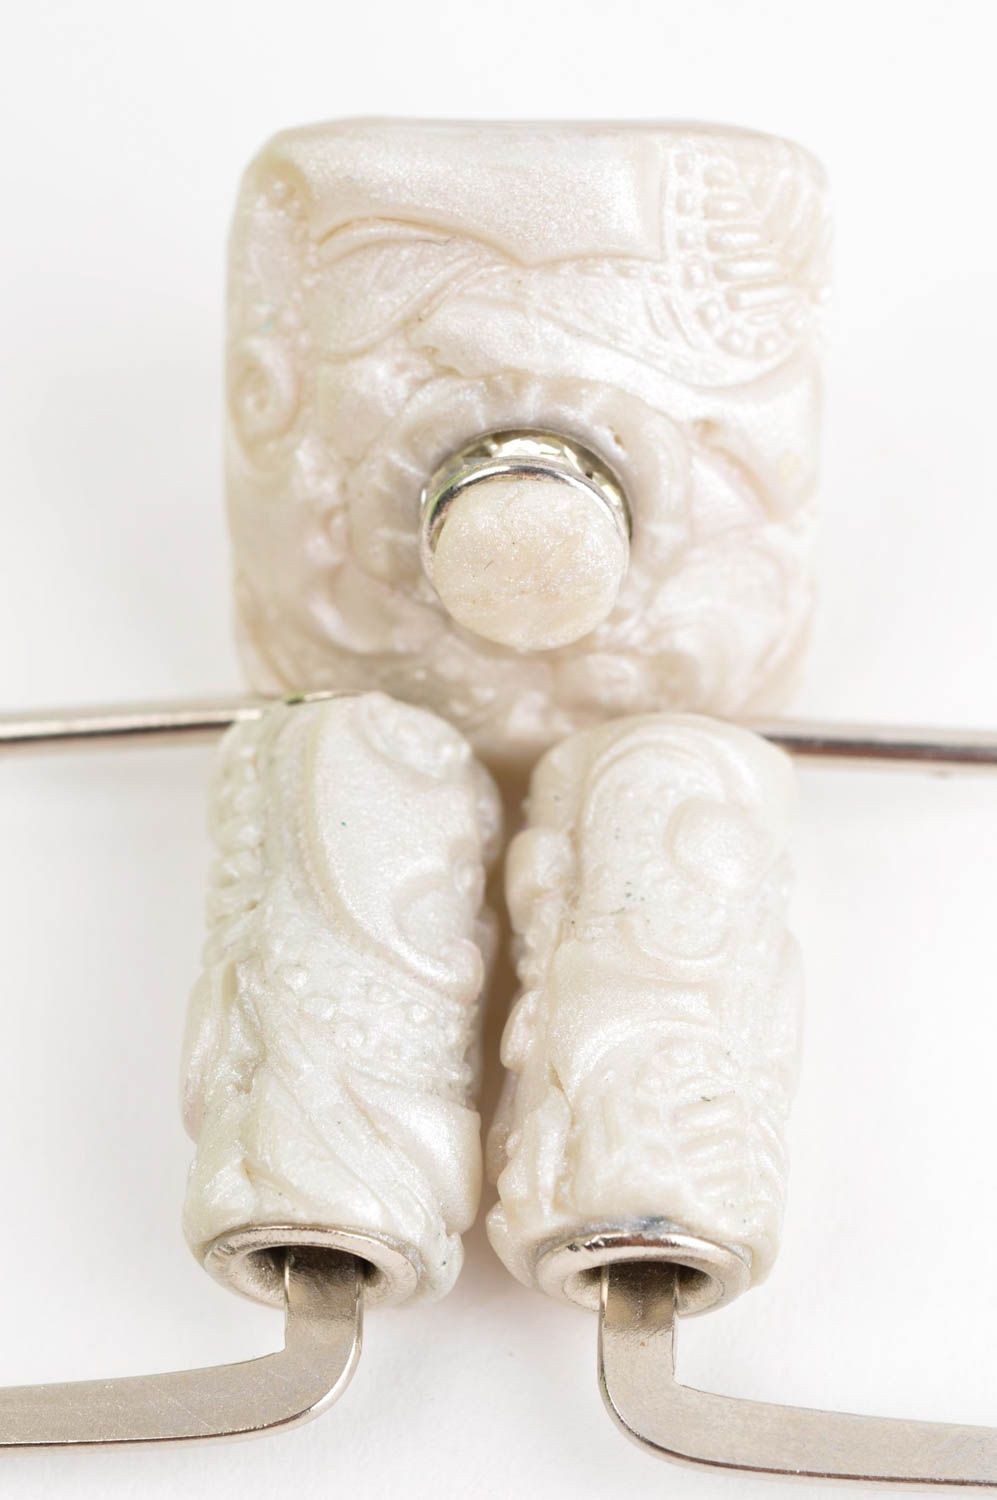 Handmade unusual ring and earrings ceramic jewelry set unusual earrings and ring photo 5